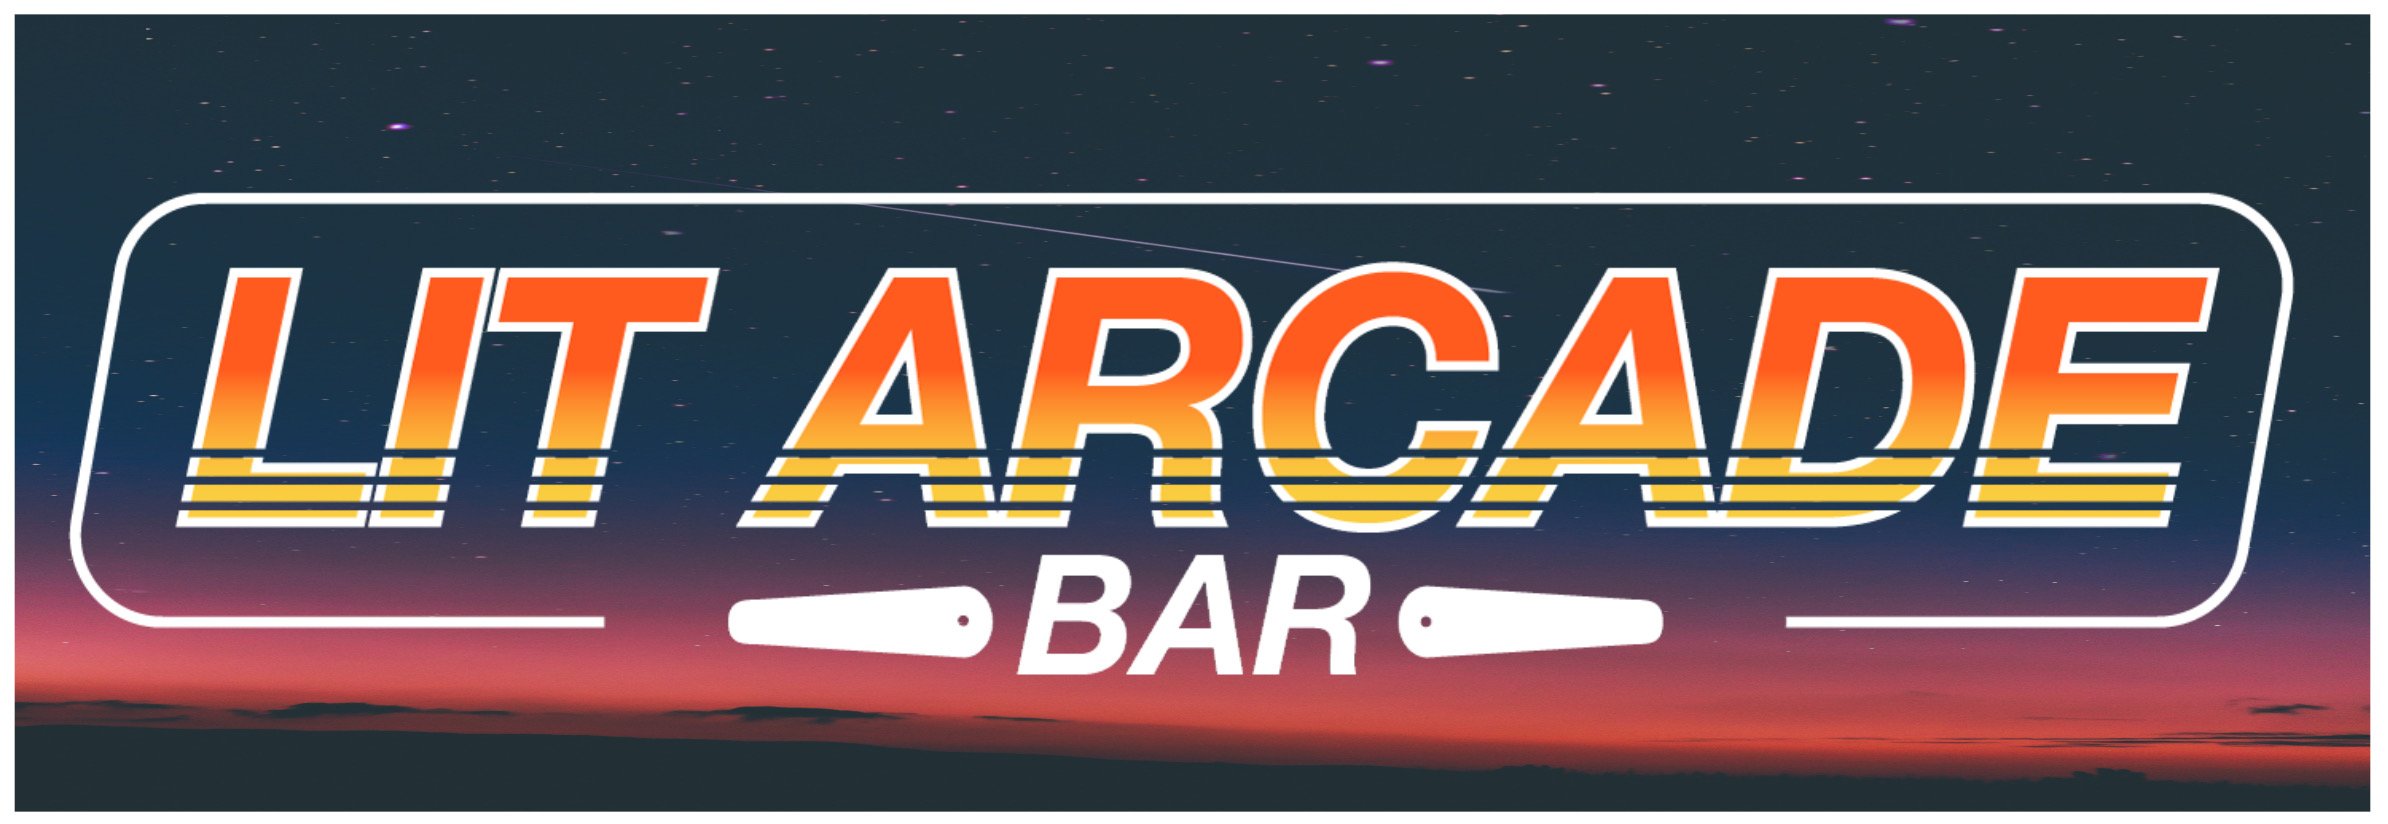 Lit Arcade Bar